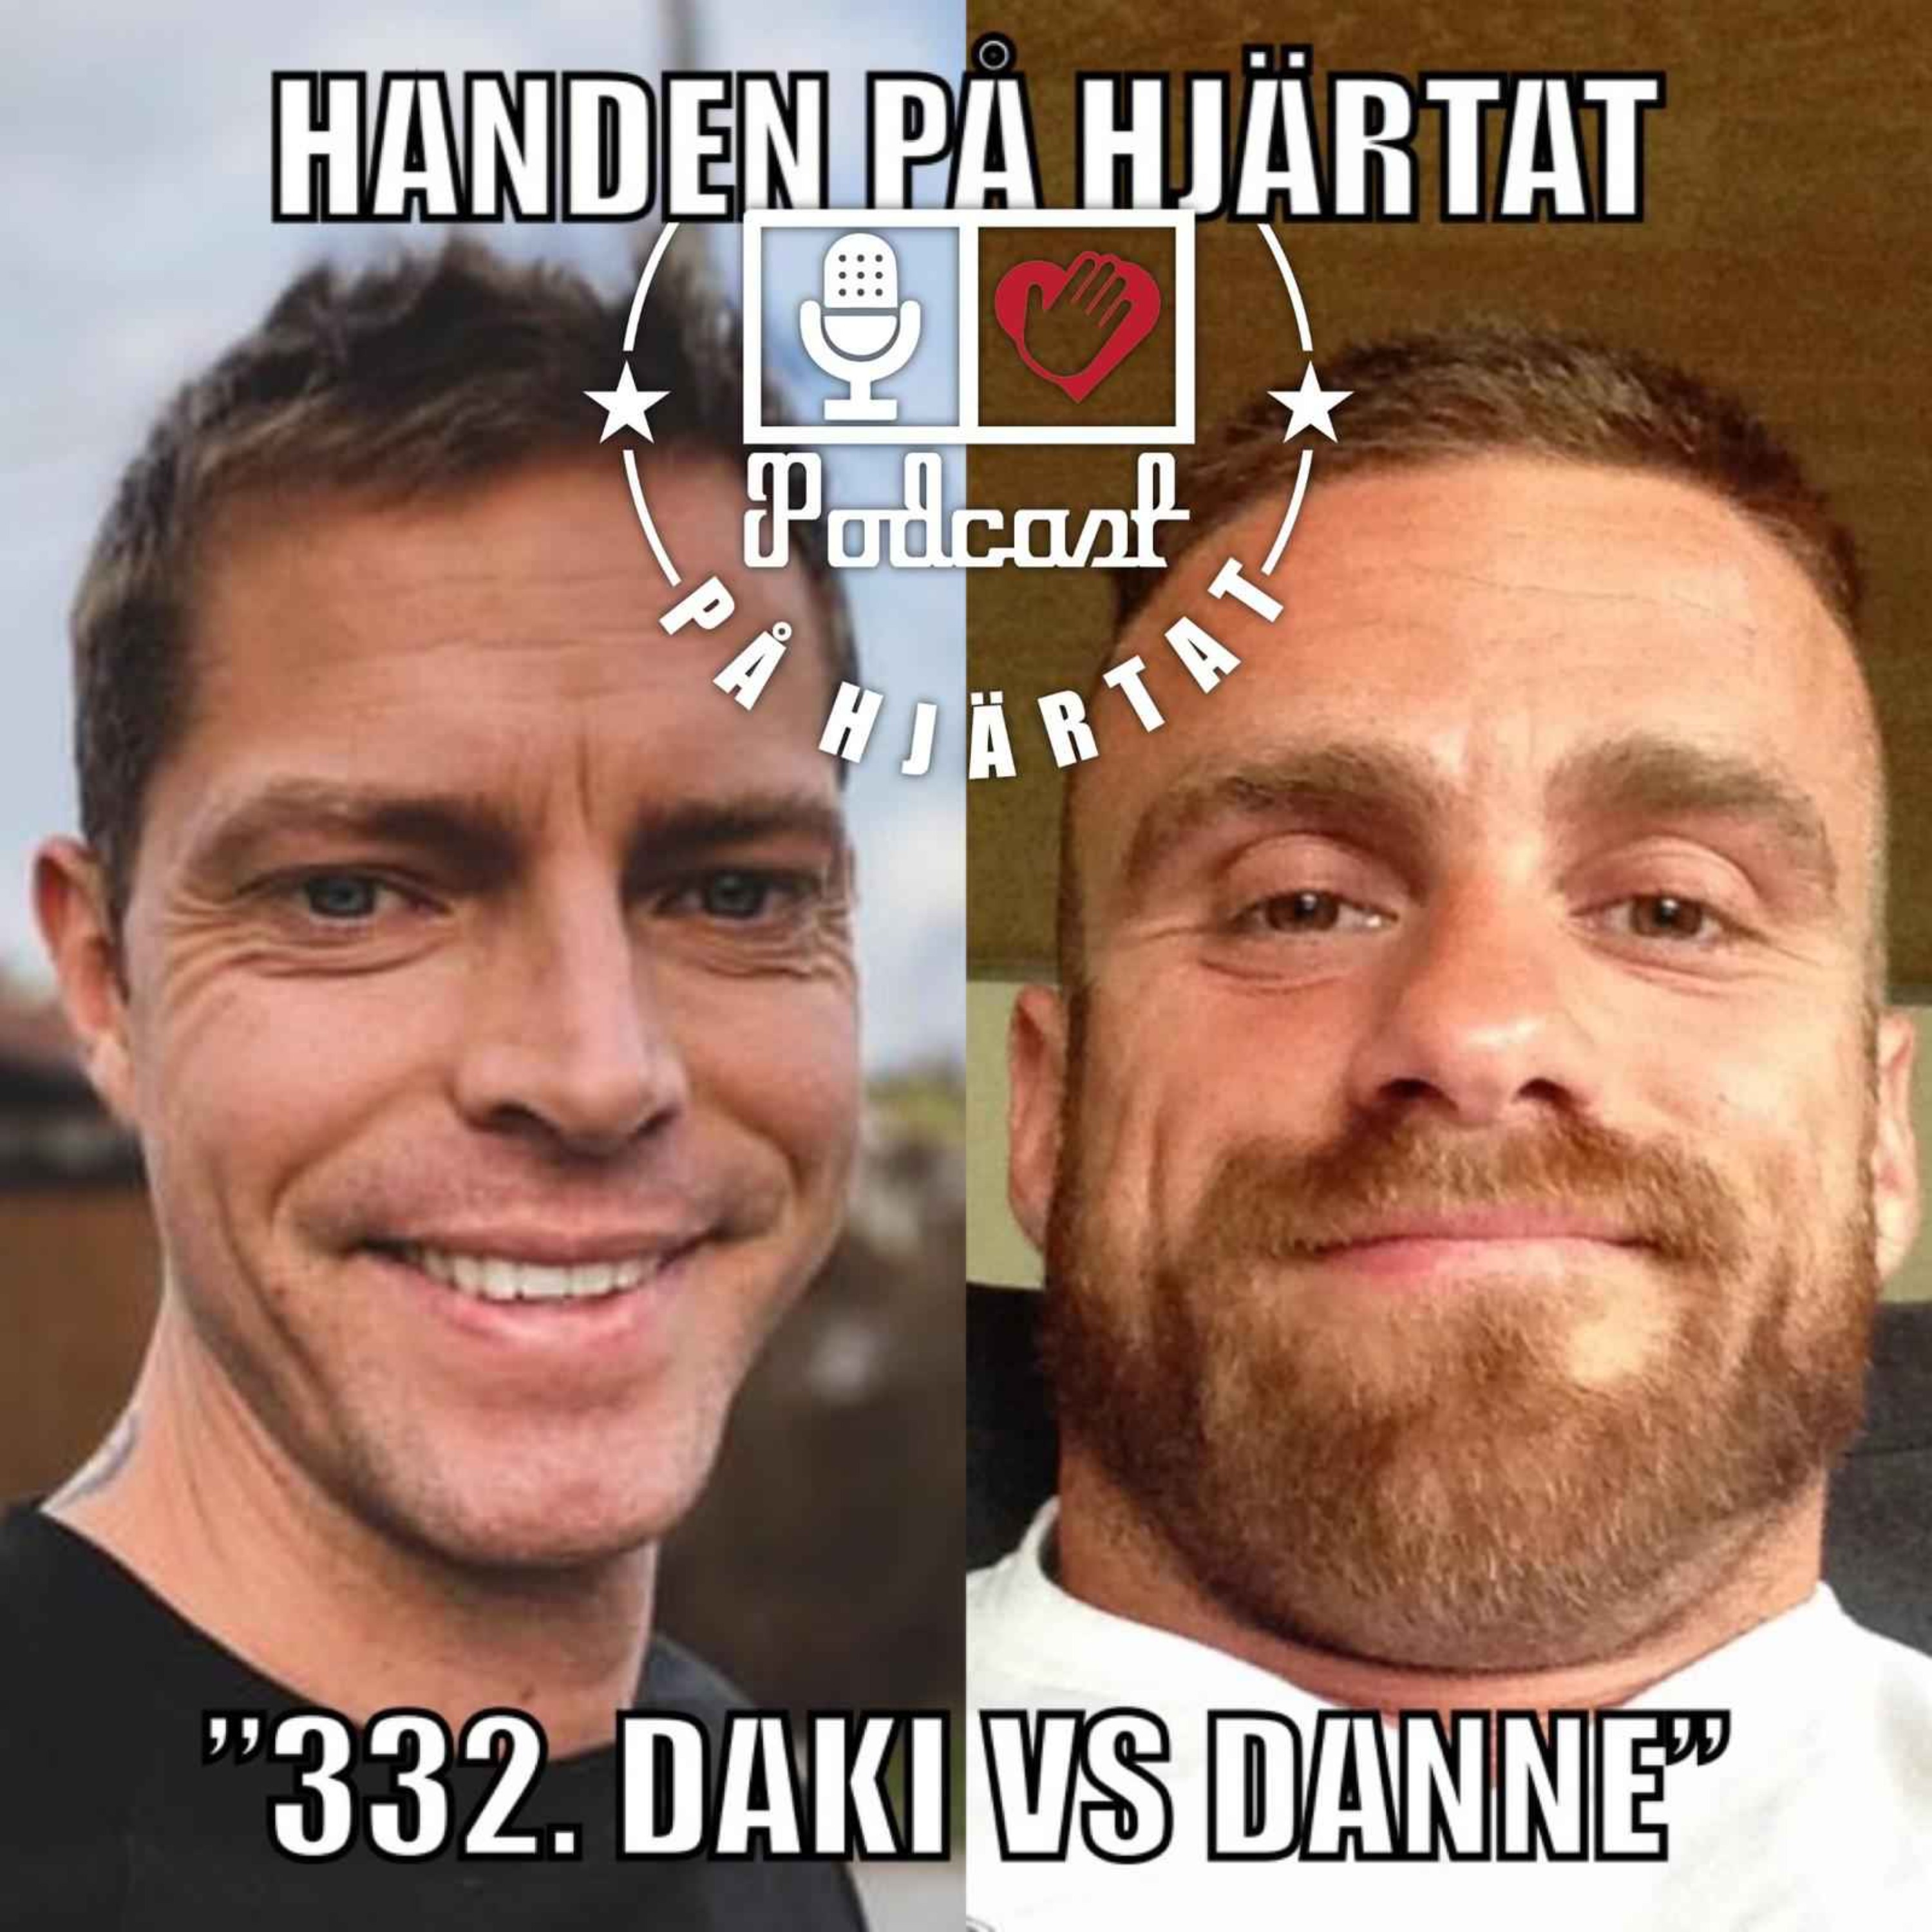 ”332. Daki vs Danne”